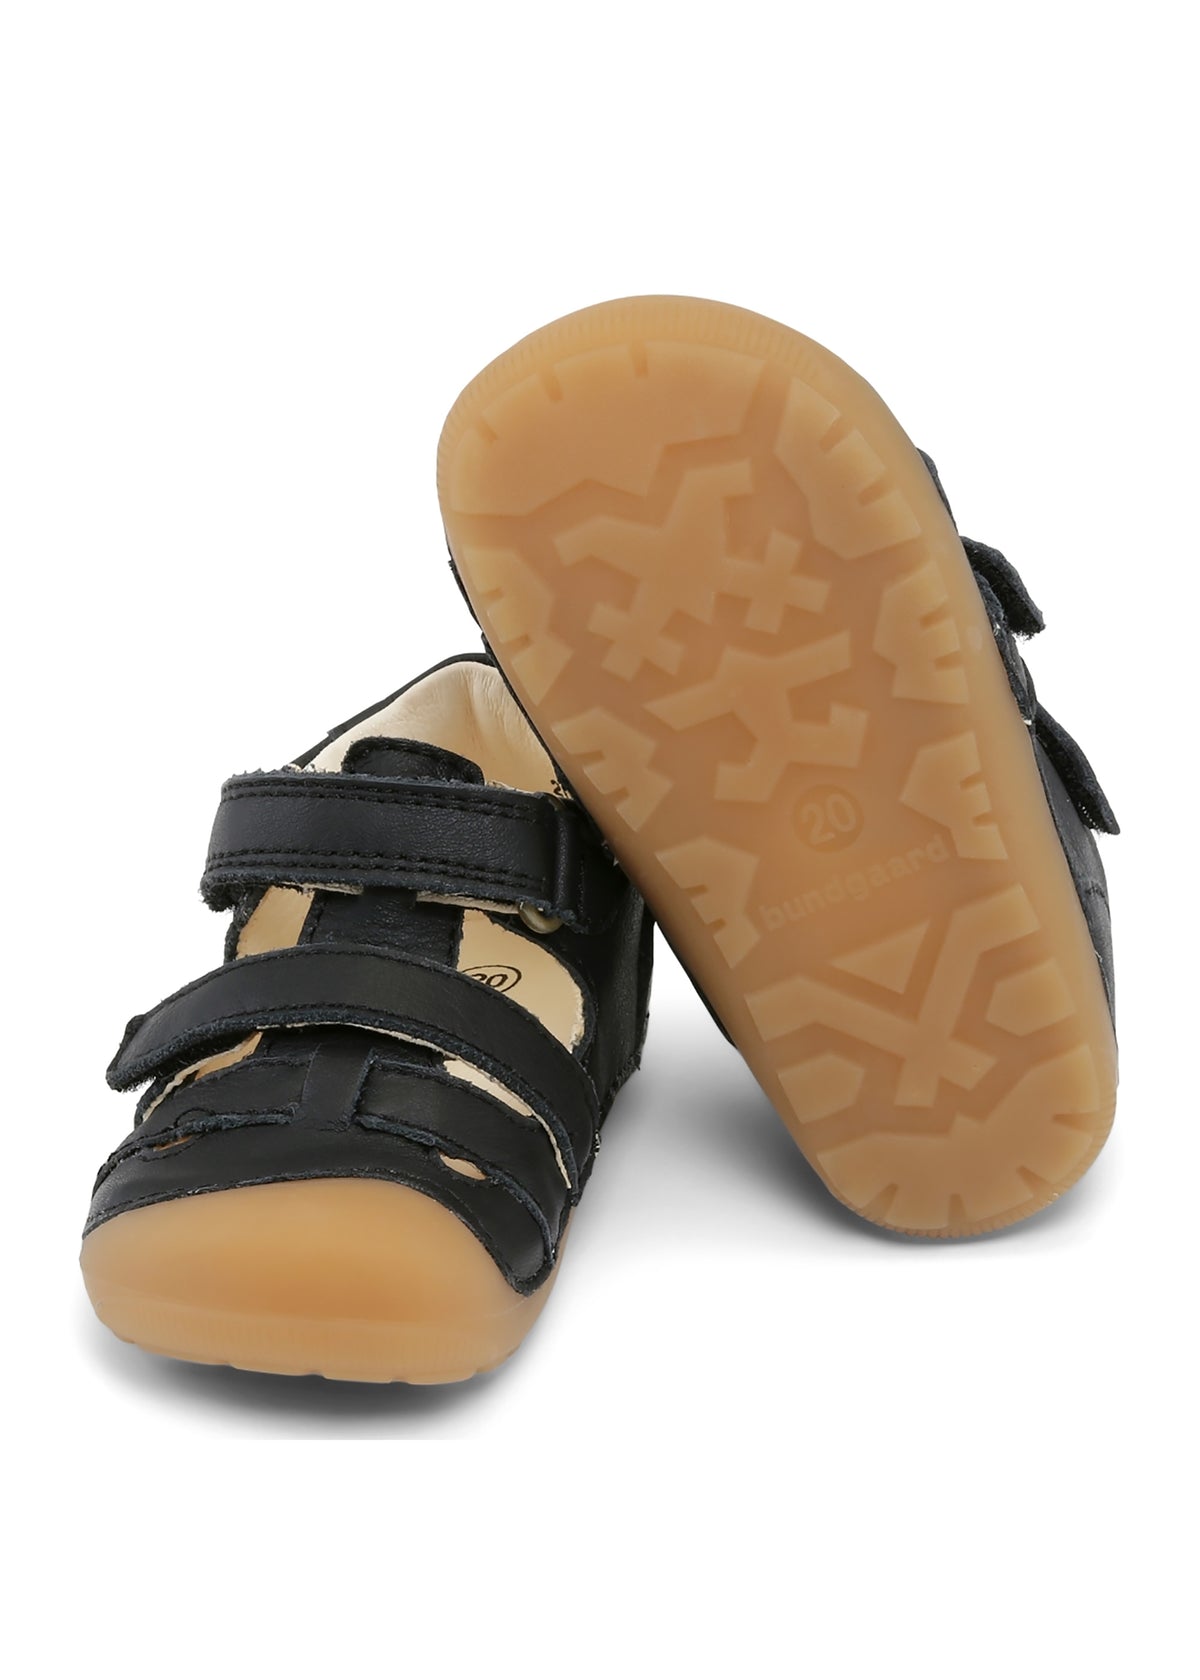 Barnsandaler - Petit Sandal, svart, stängd tå, Bundgaard Zero Heel